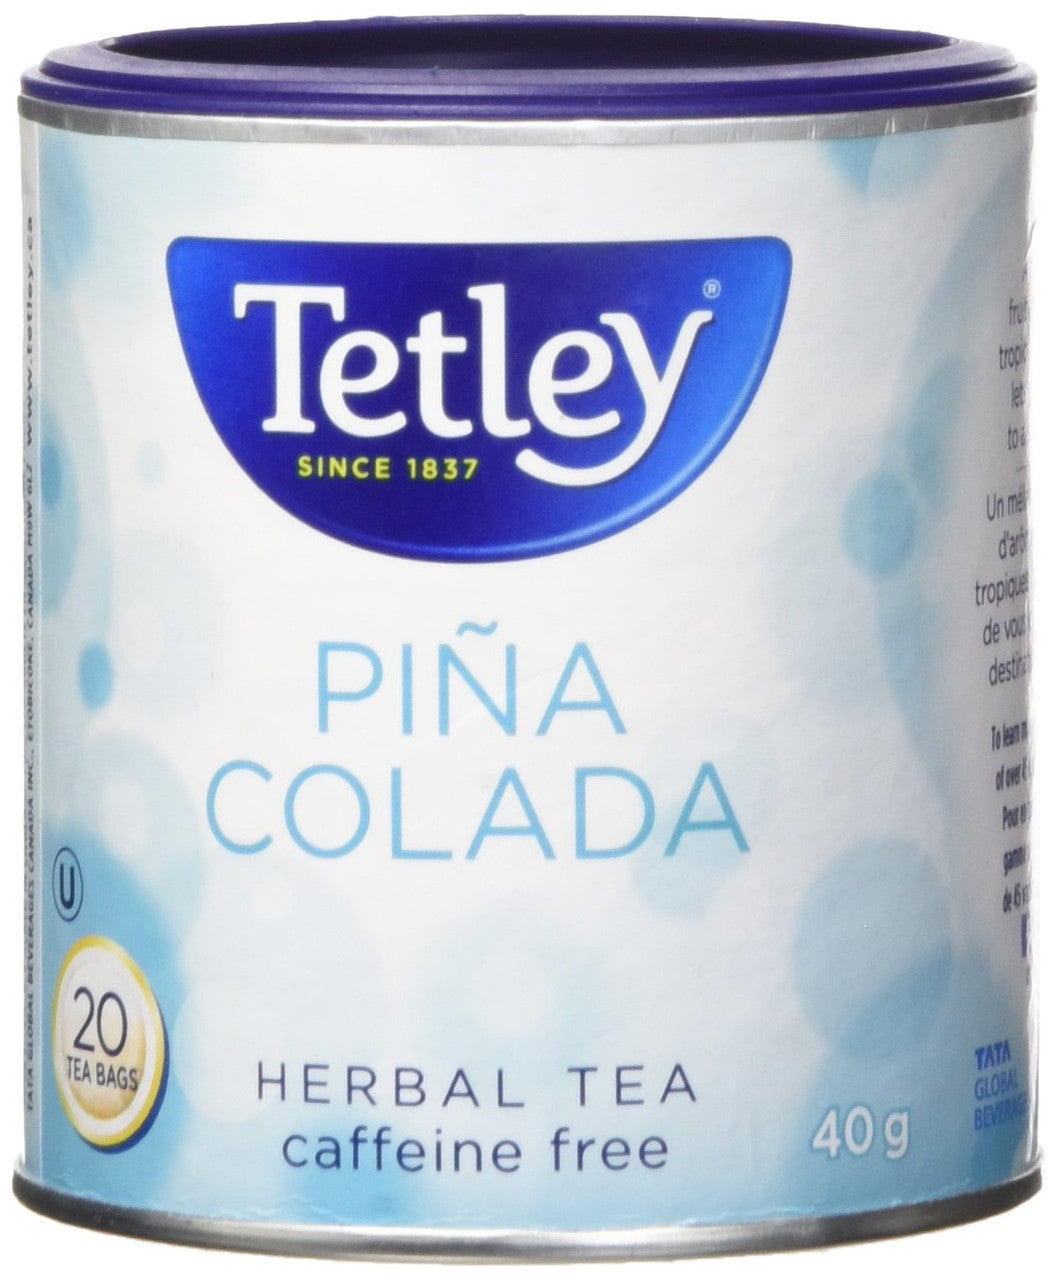 Tetley Pina Colada Herbal Tea Caffeine Free 20 Tea Bags{Imported from Canada}